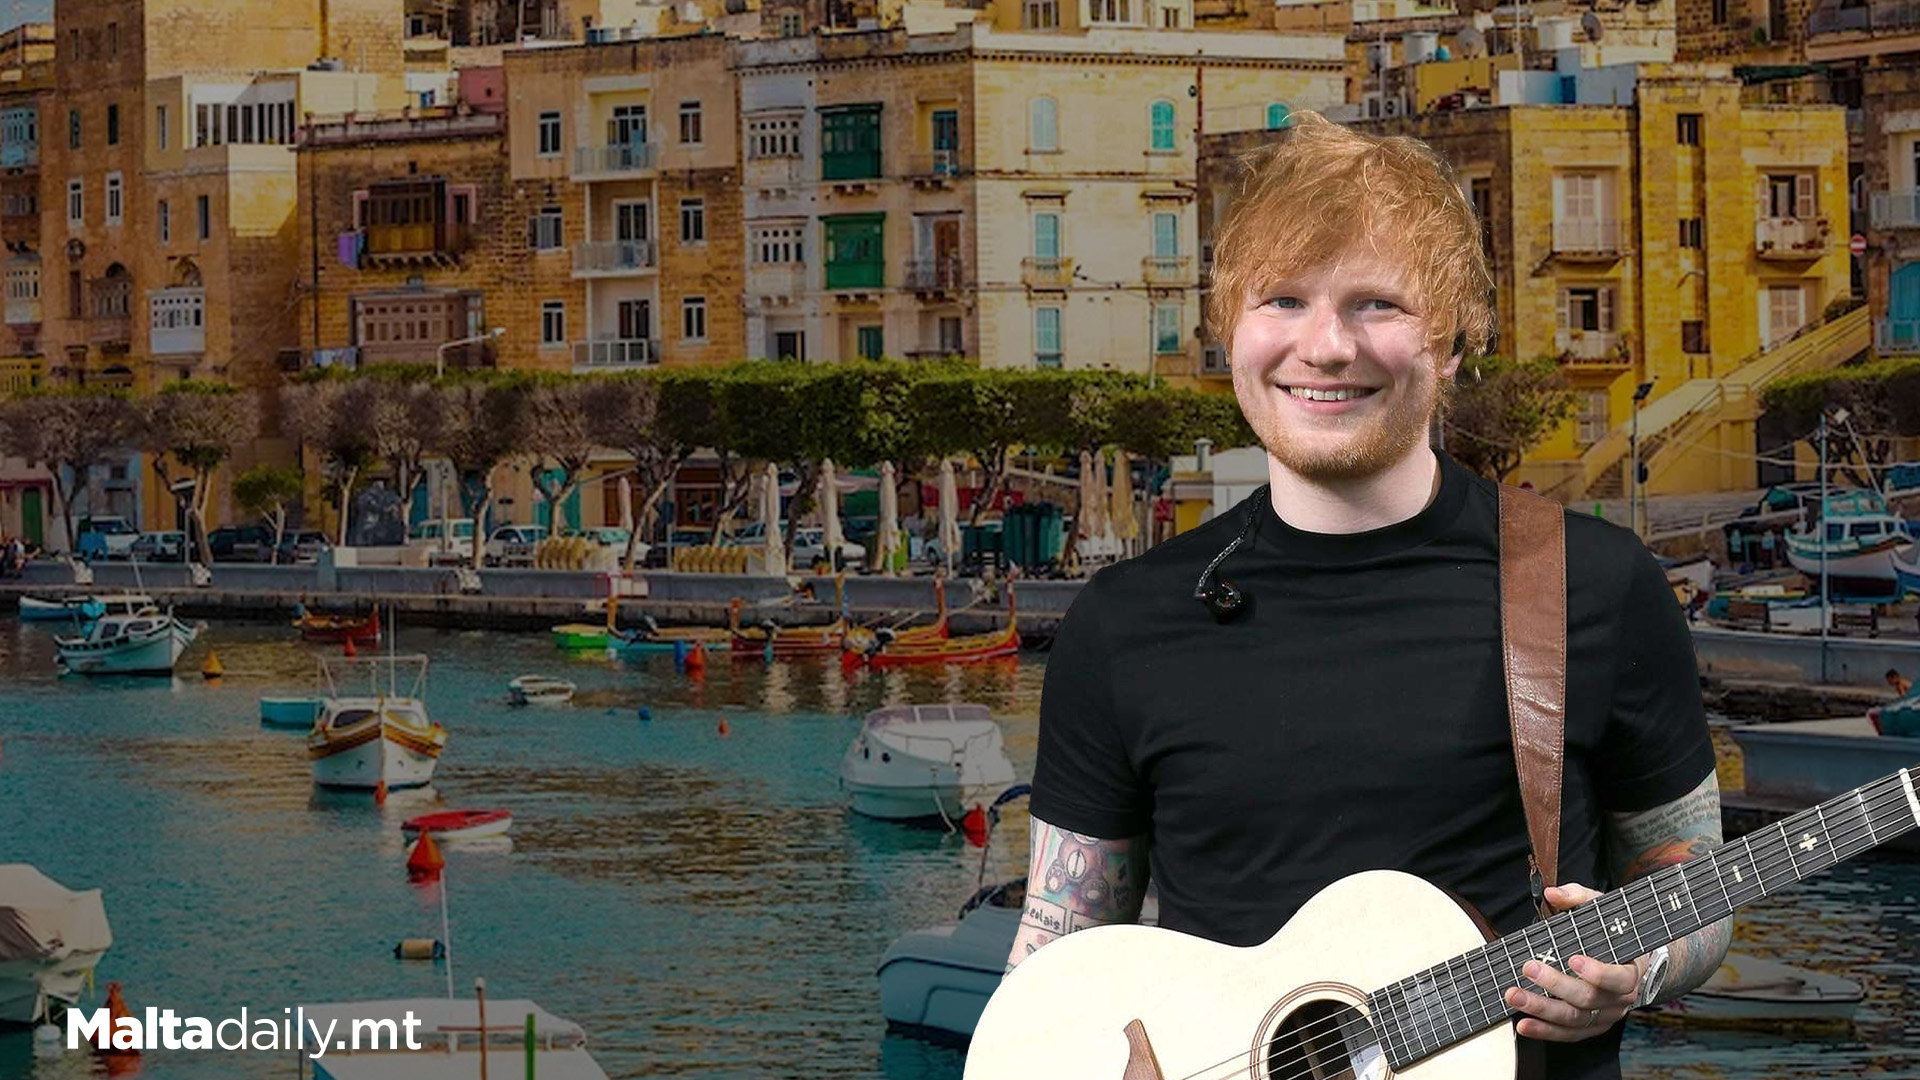 Transport On Offer For Ed Sheeran Concert!